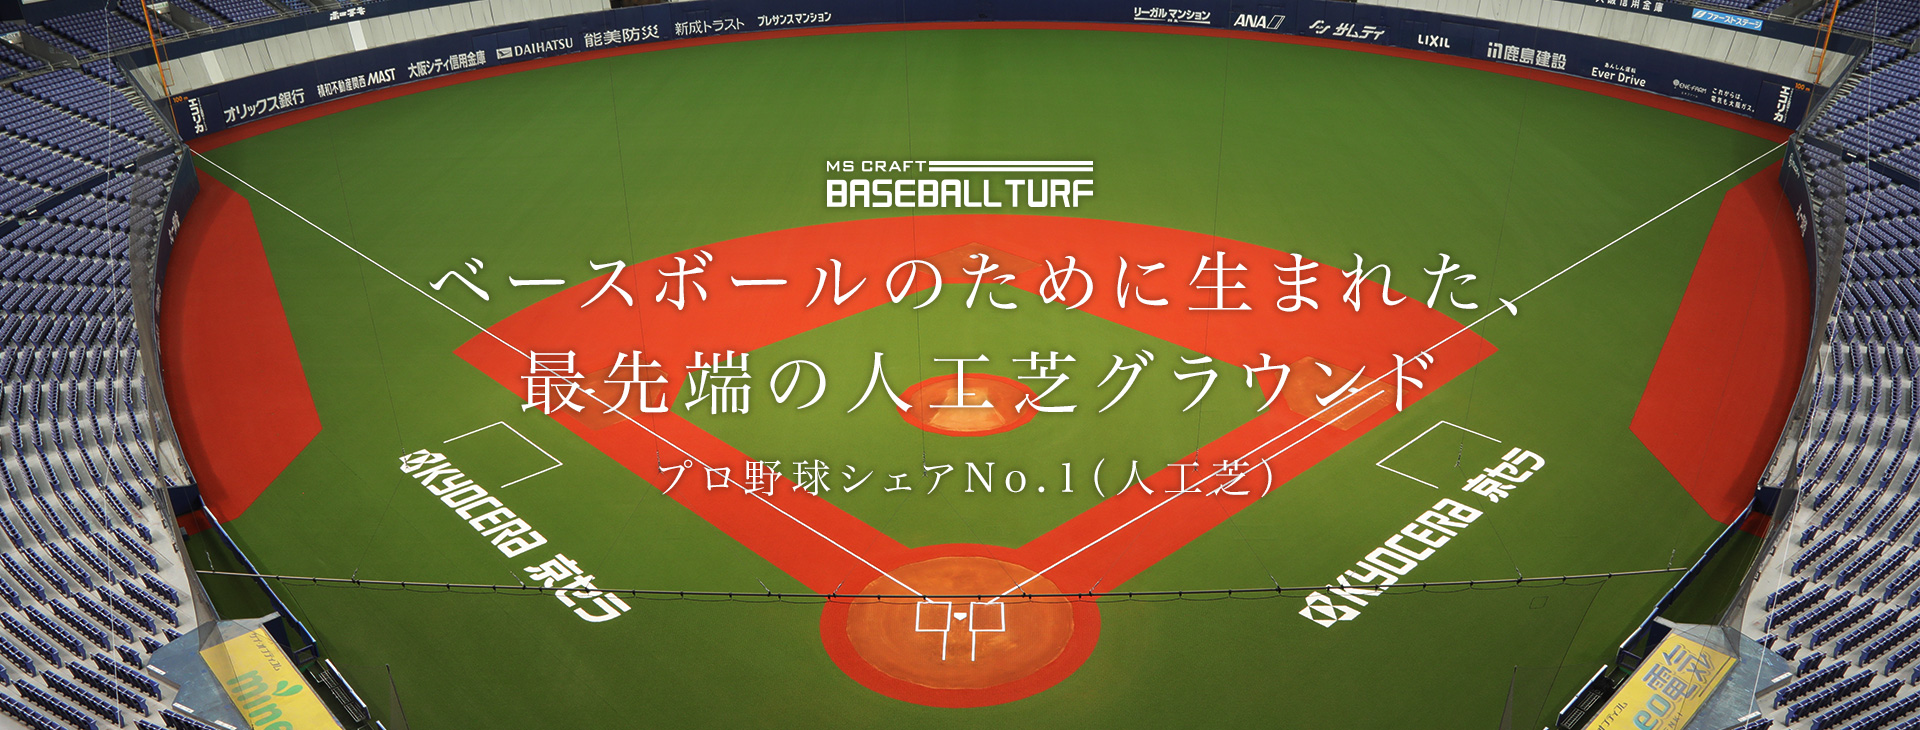 baseballturf